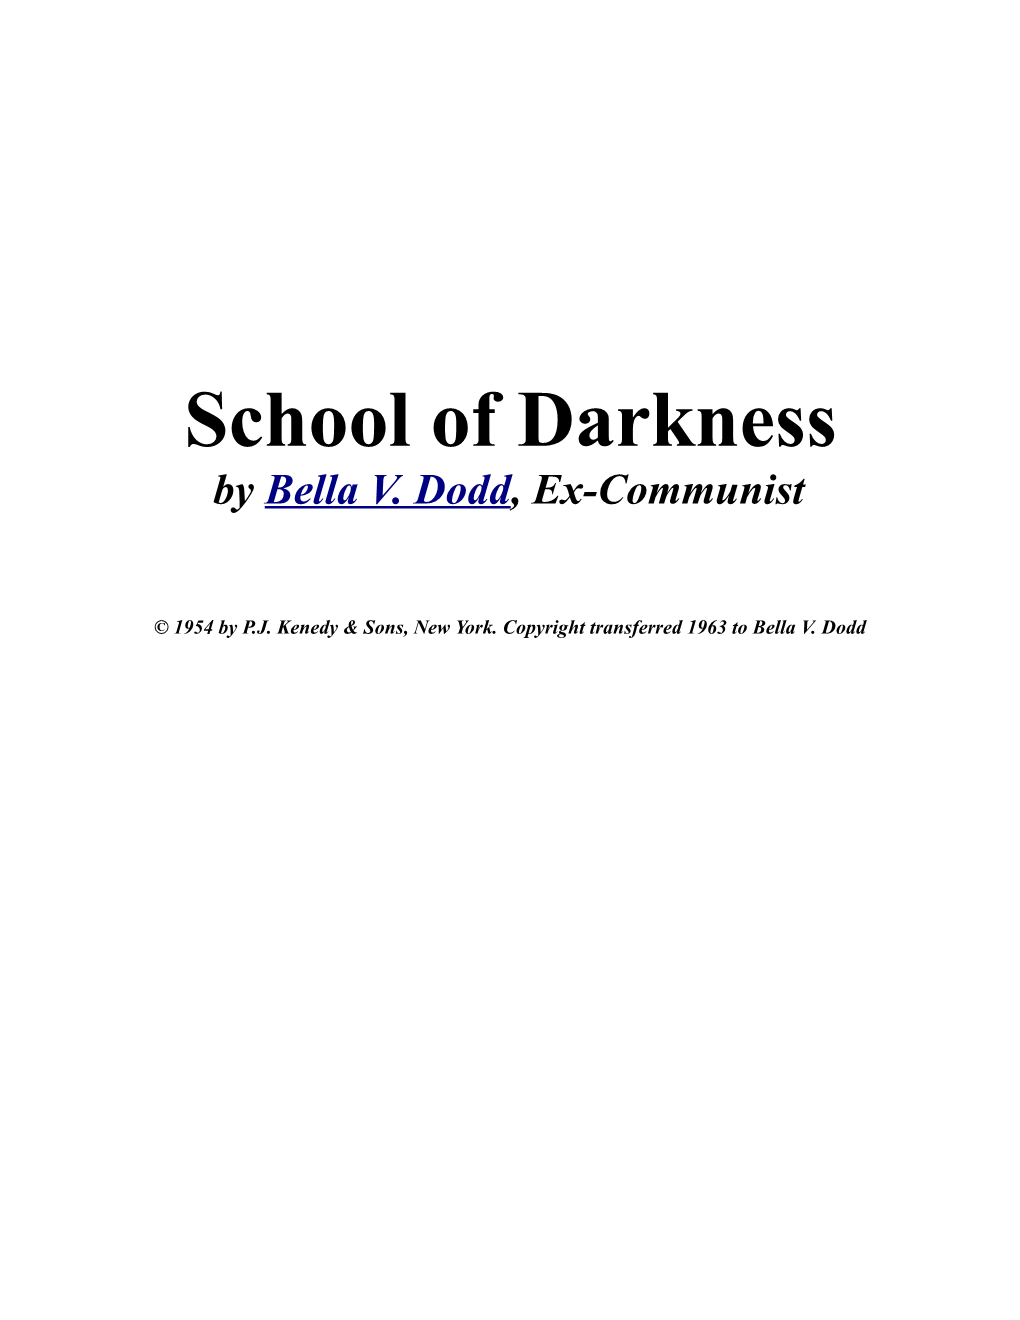 School of Darkness by Bella Dodd